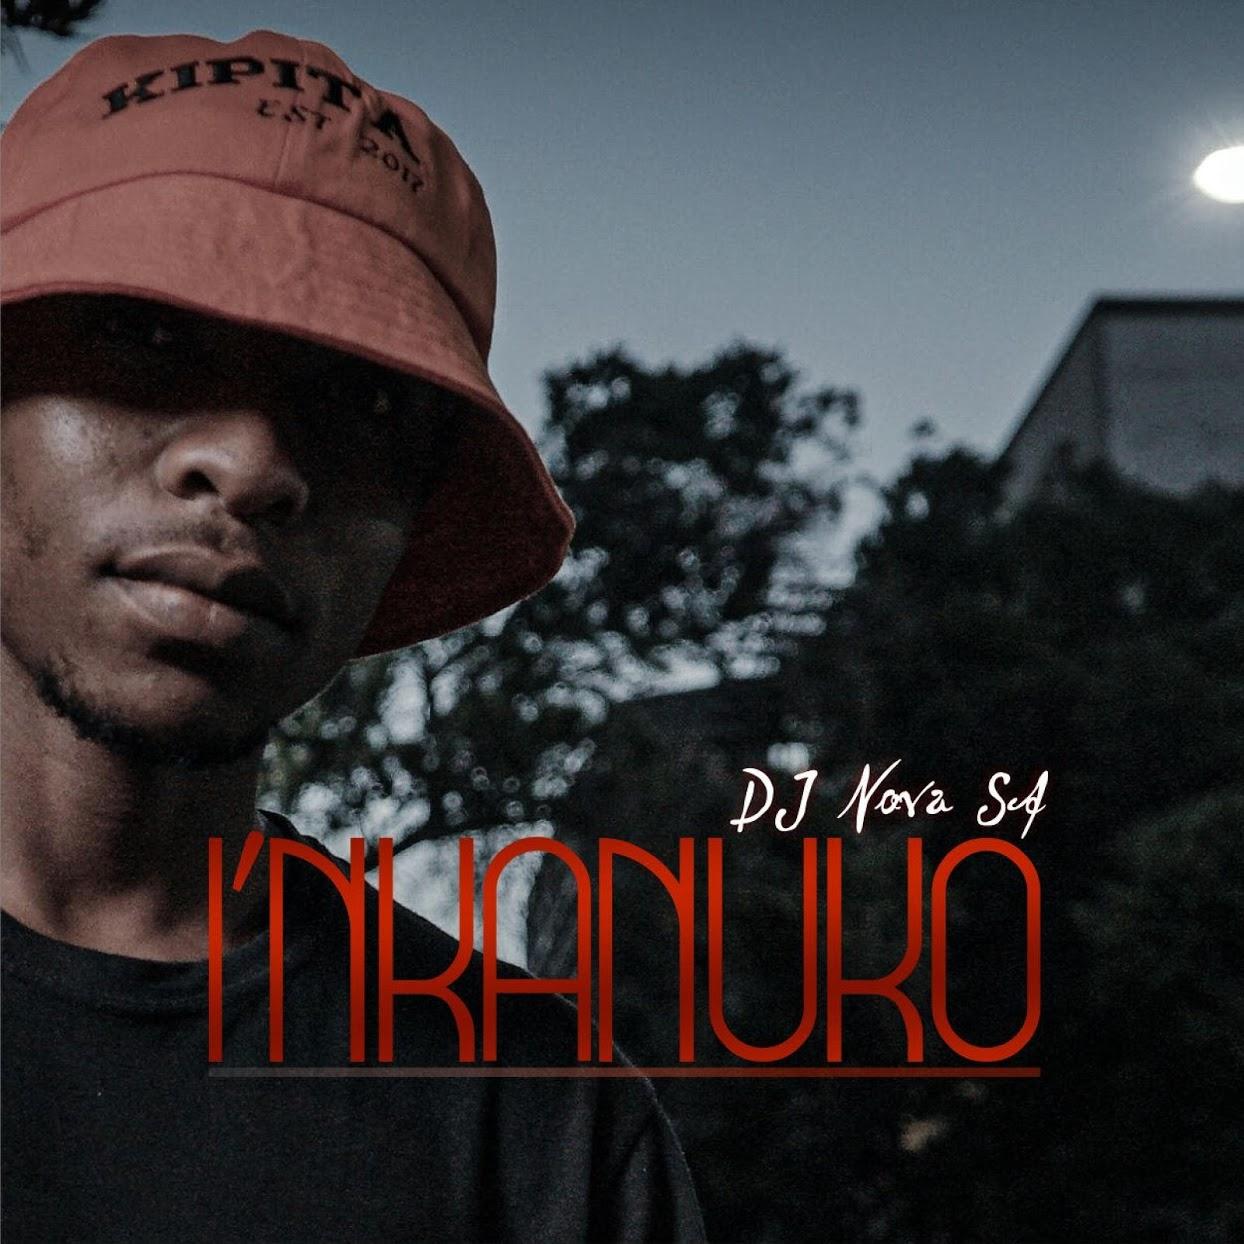 DJ Nova SA - I'nkanuko